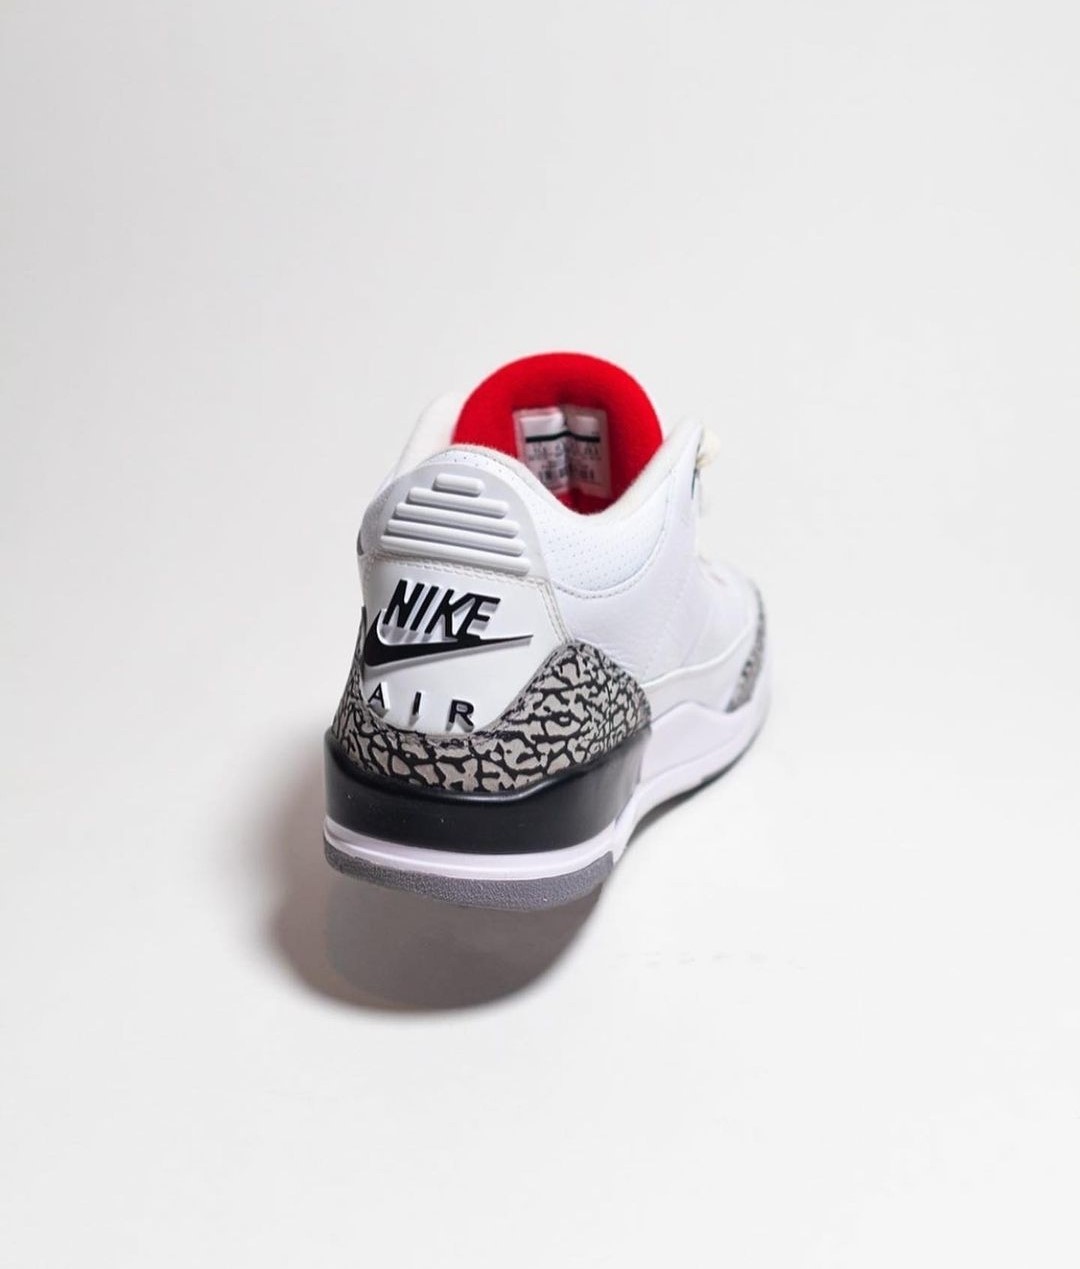 Air Jordan 3 “White Cement Reimagined” Release Date